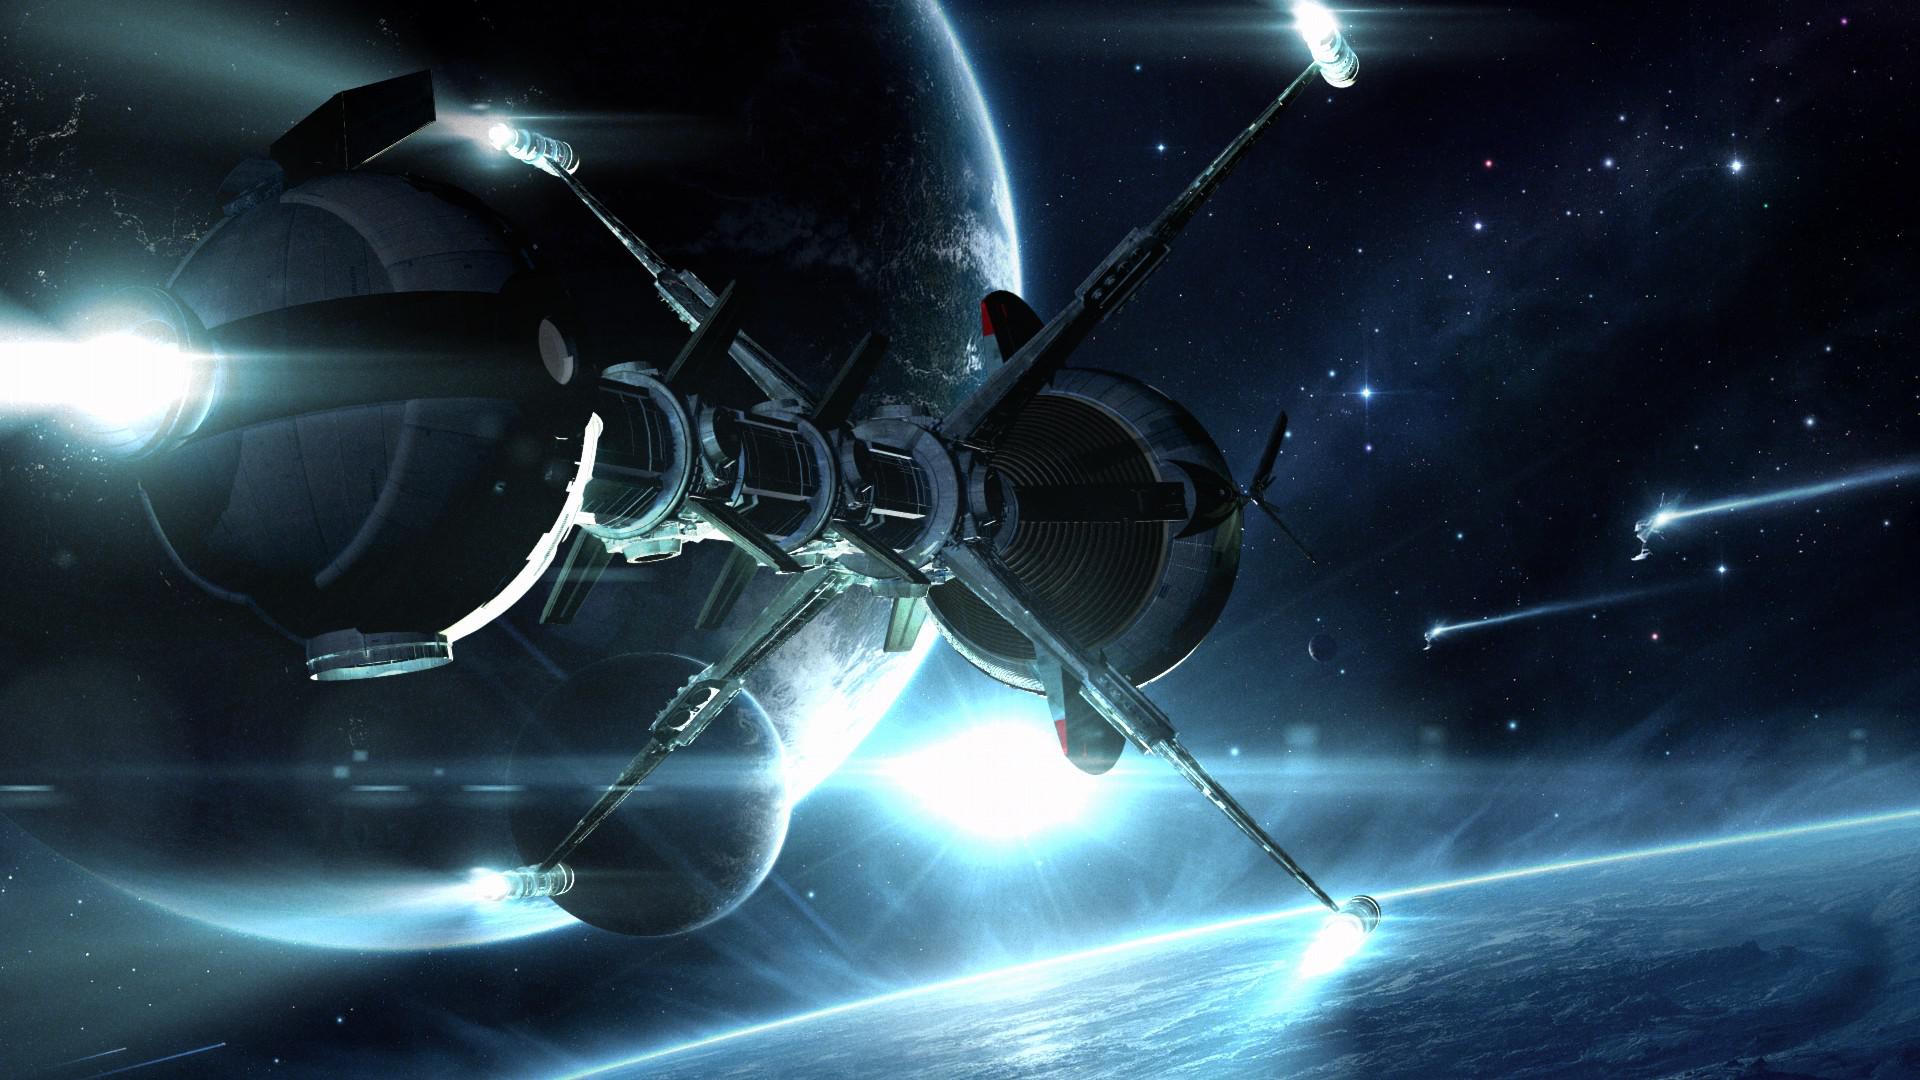 Hd Sci Fi Spacecraft Spaceship Planets Stars Art Image Comet Captain Future